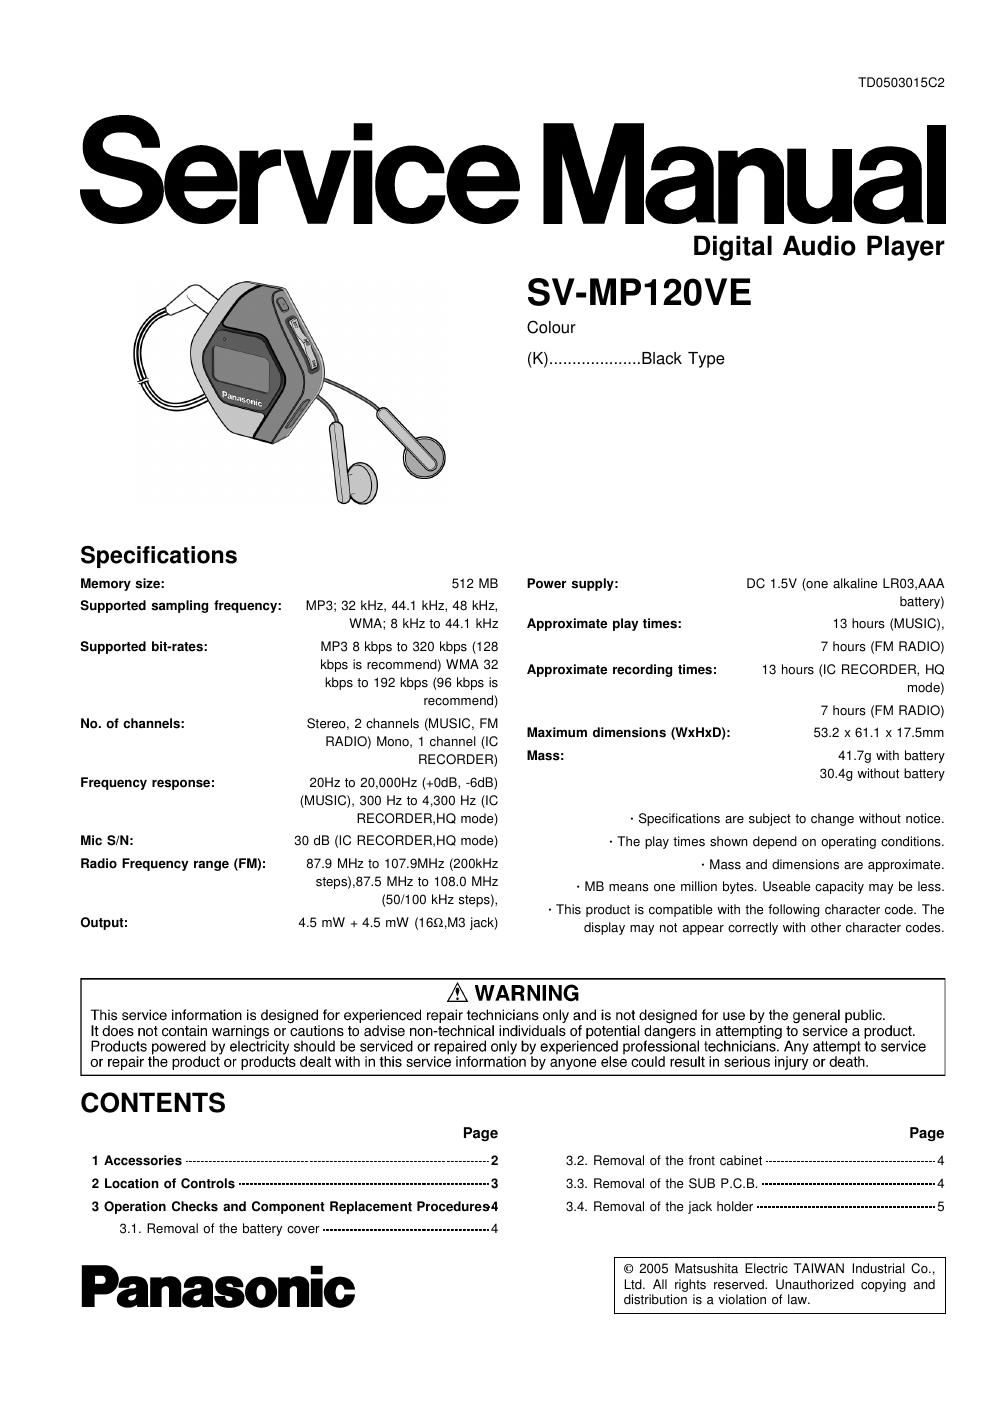 panasonic sv mp 120 ve service manual